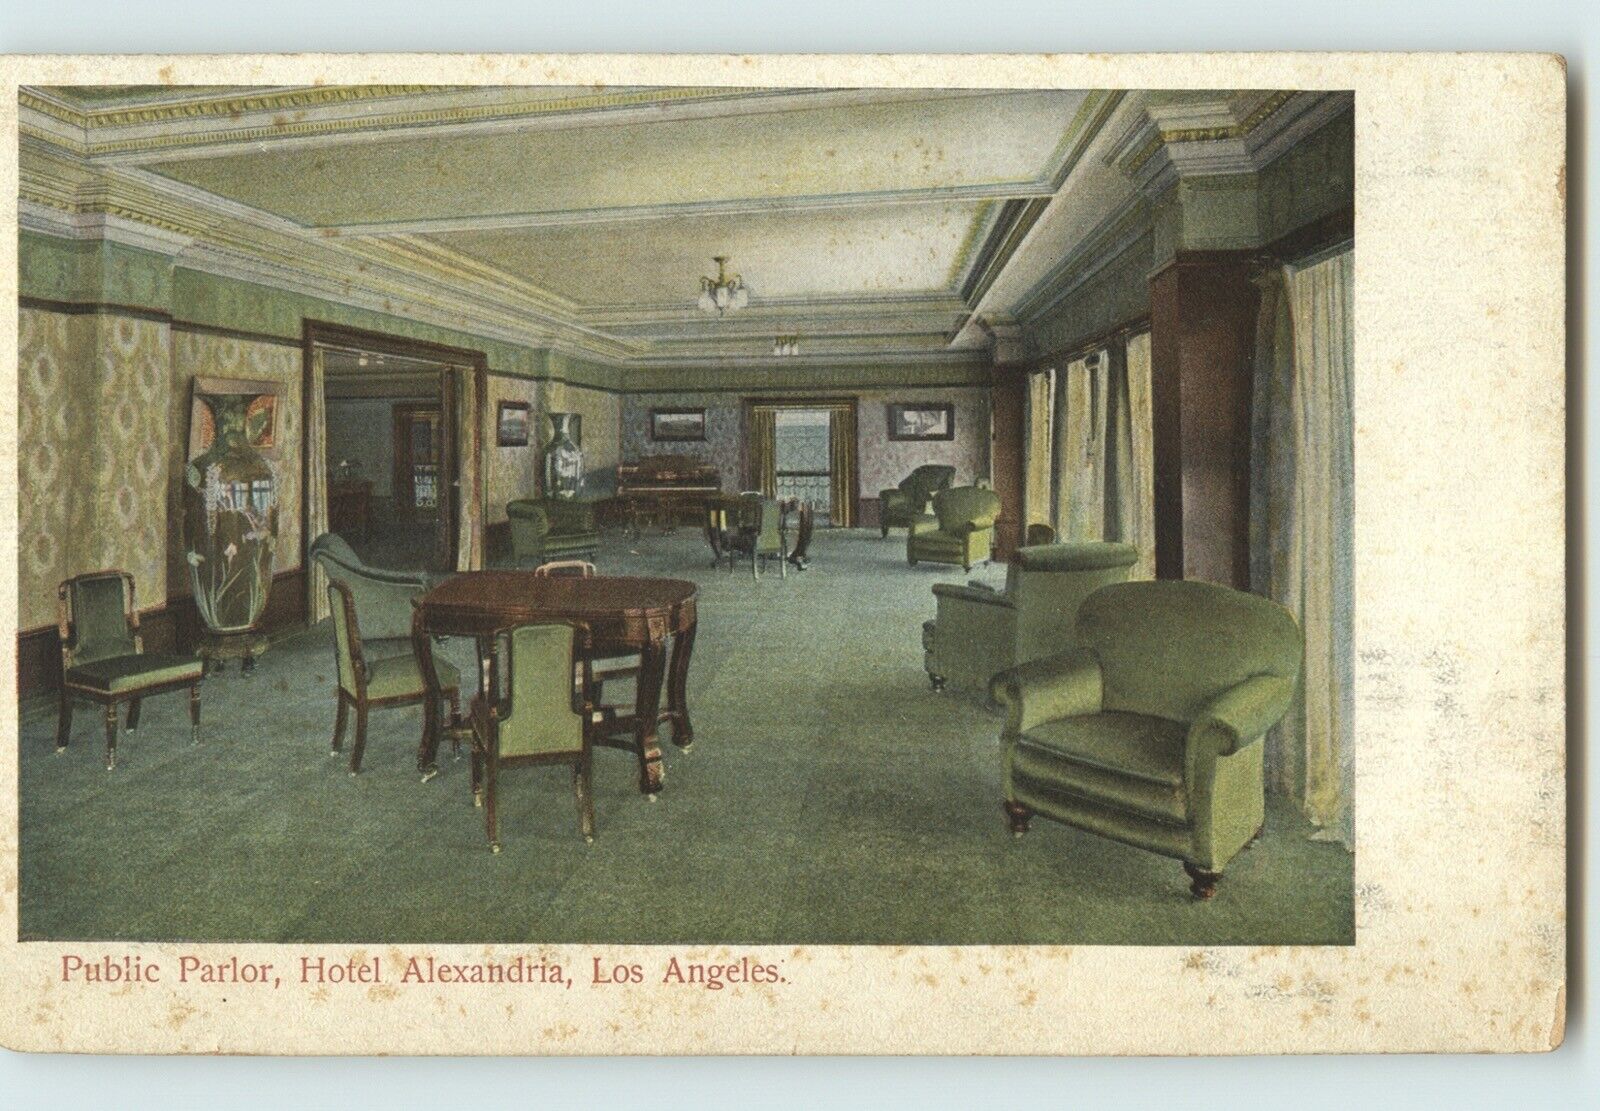 Postcard: View of Public Parlor of Hotel Alexandria - Los Angeles, California